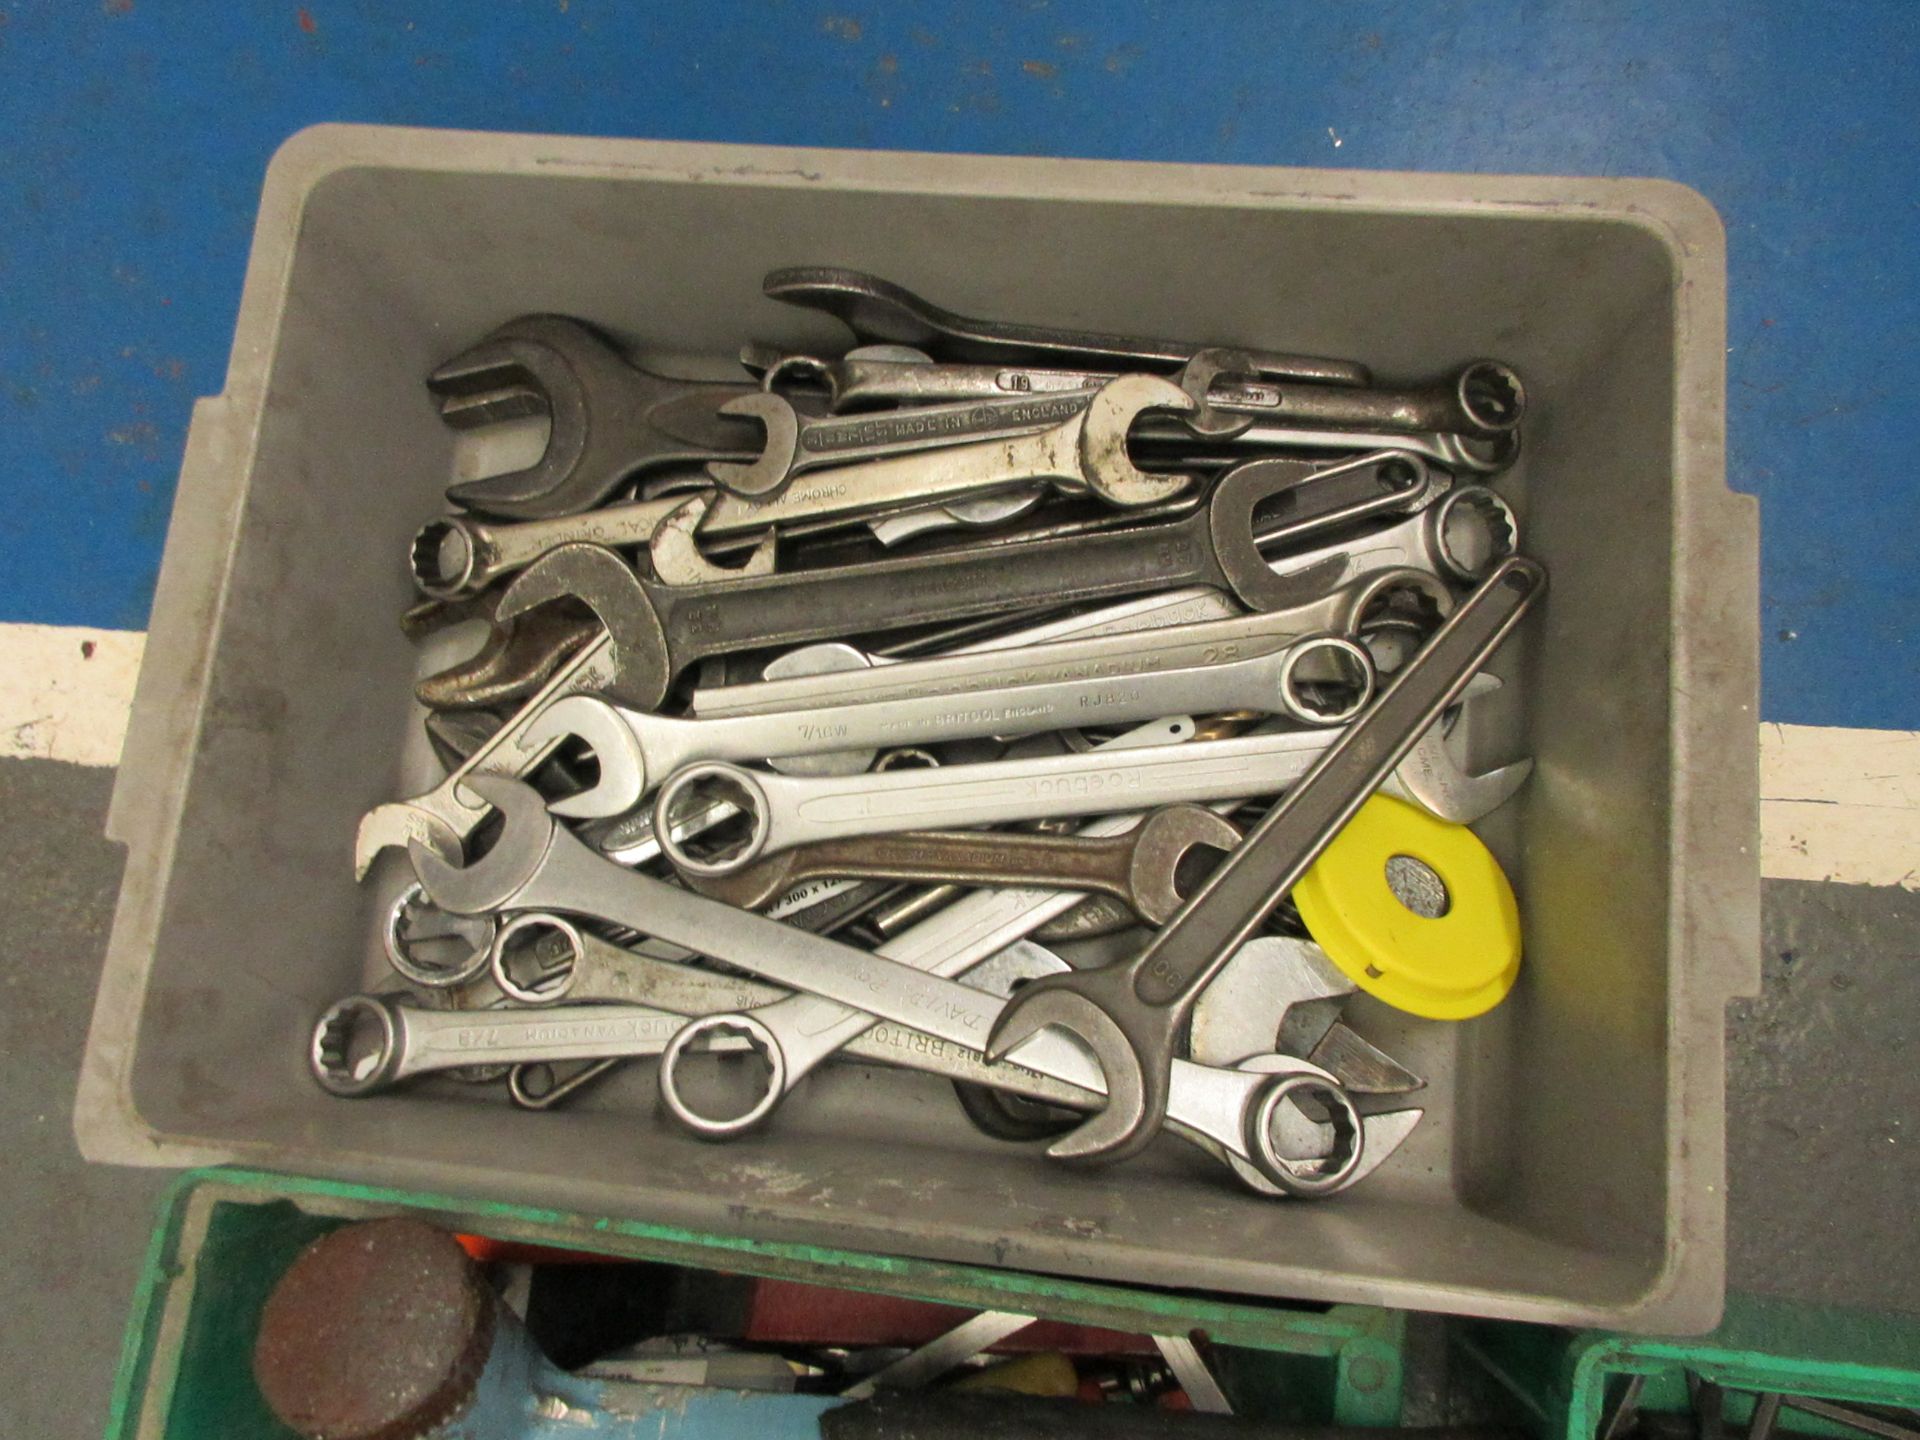 Assorted hand tools including spanners, allen keys, mallets, etc. - Bild 2 aus 6